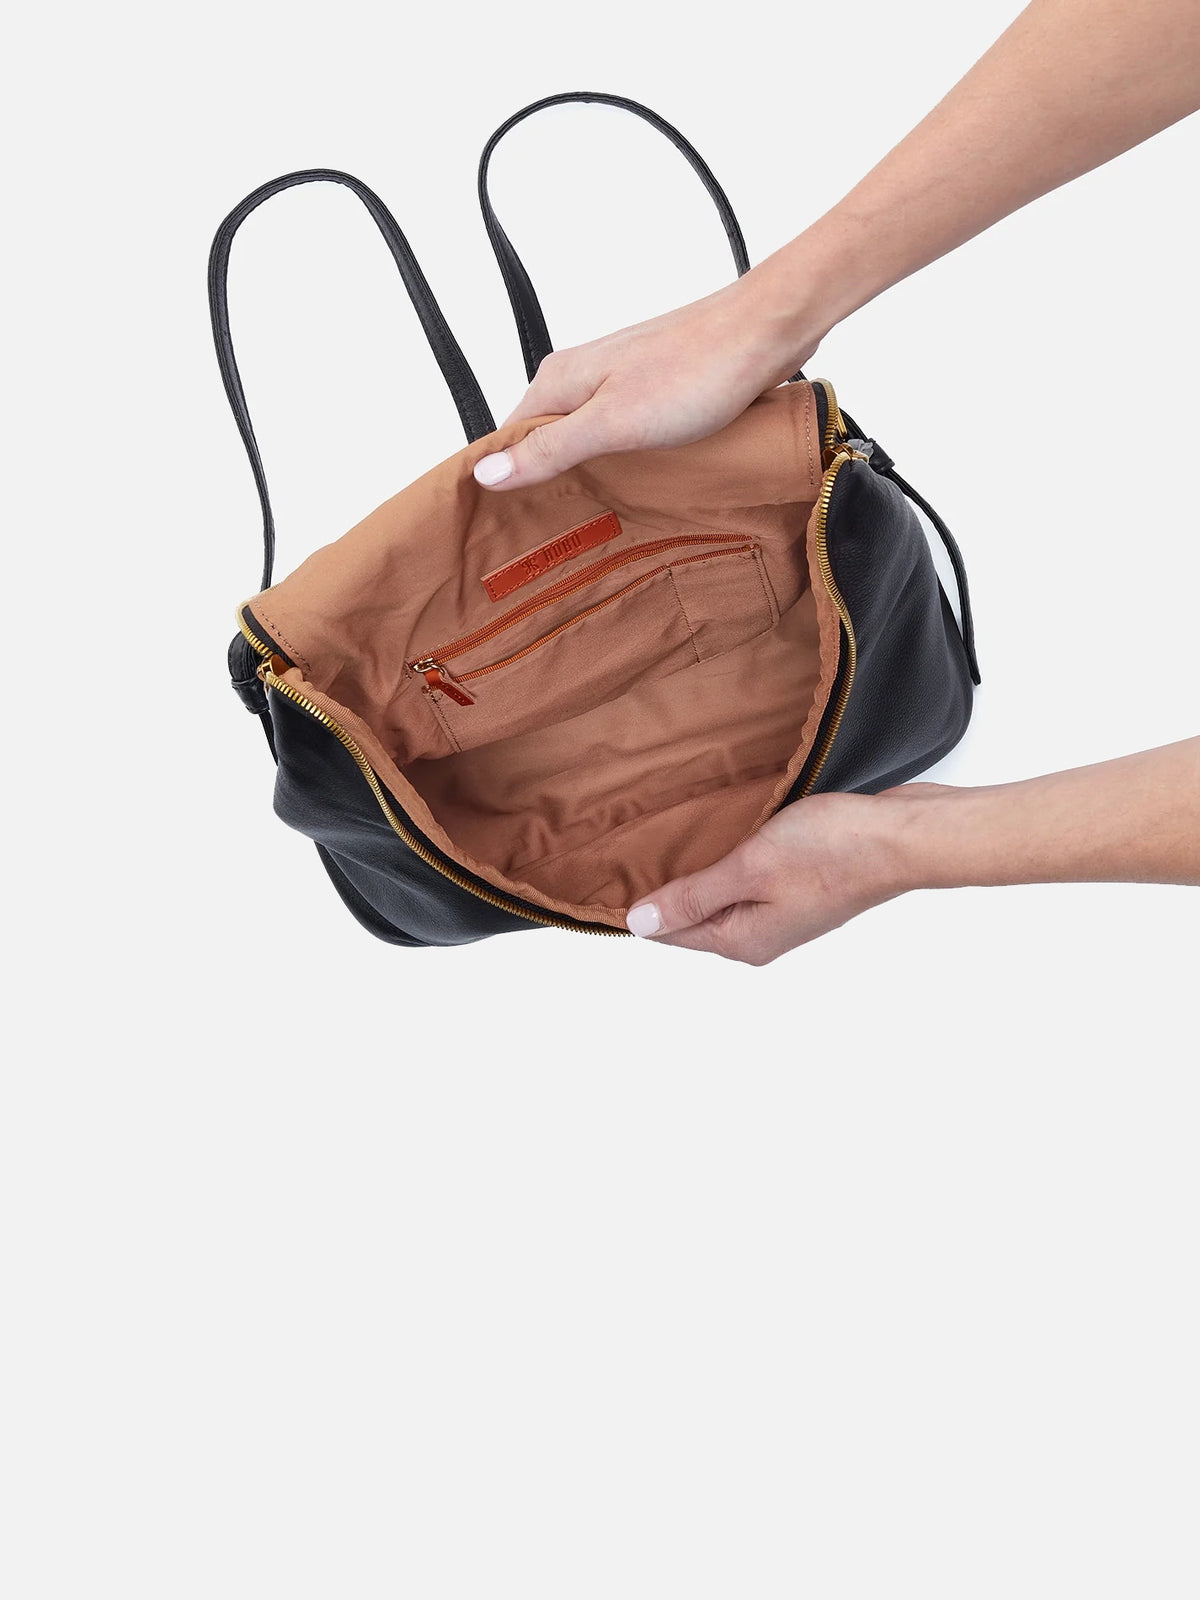 hobo fern backpack in black pebbled leather